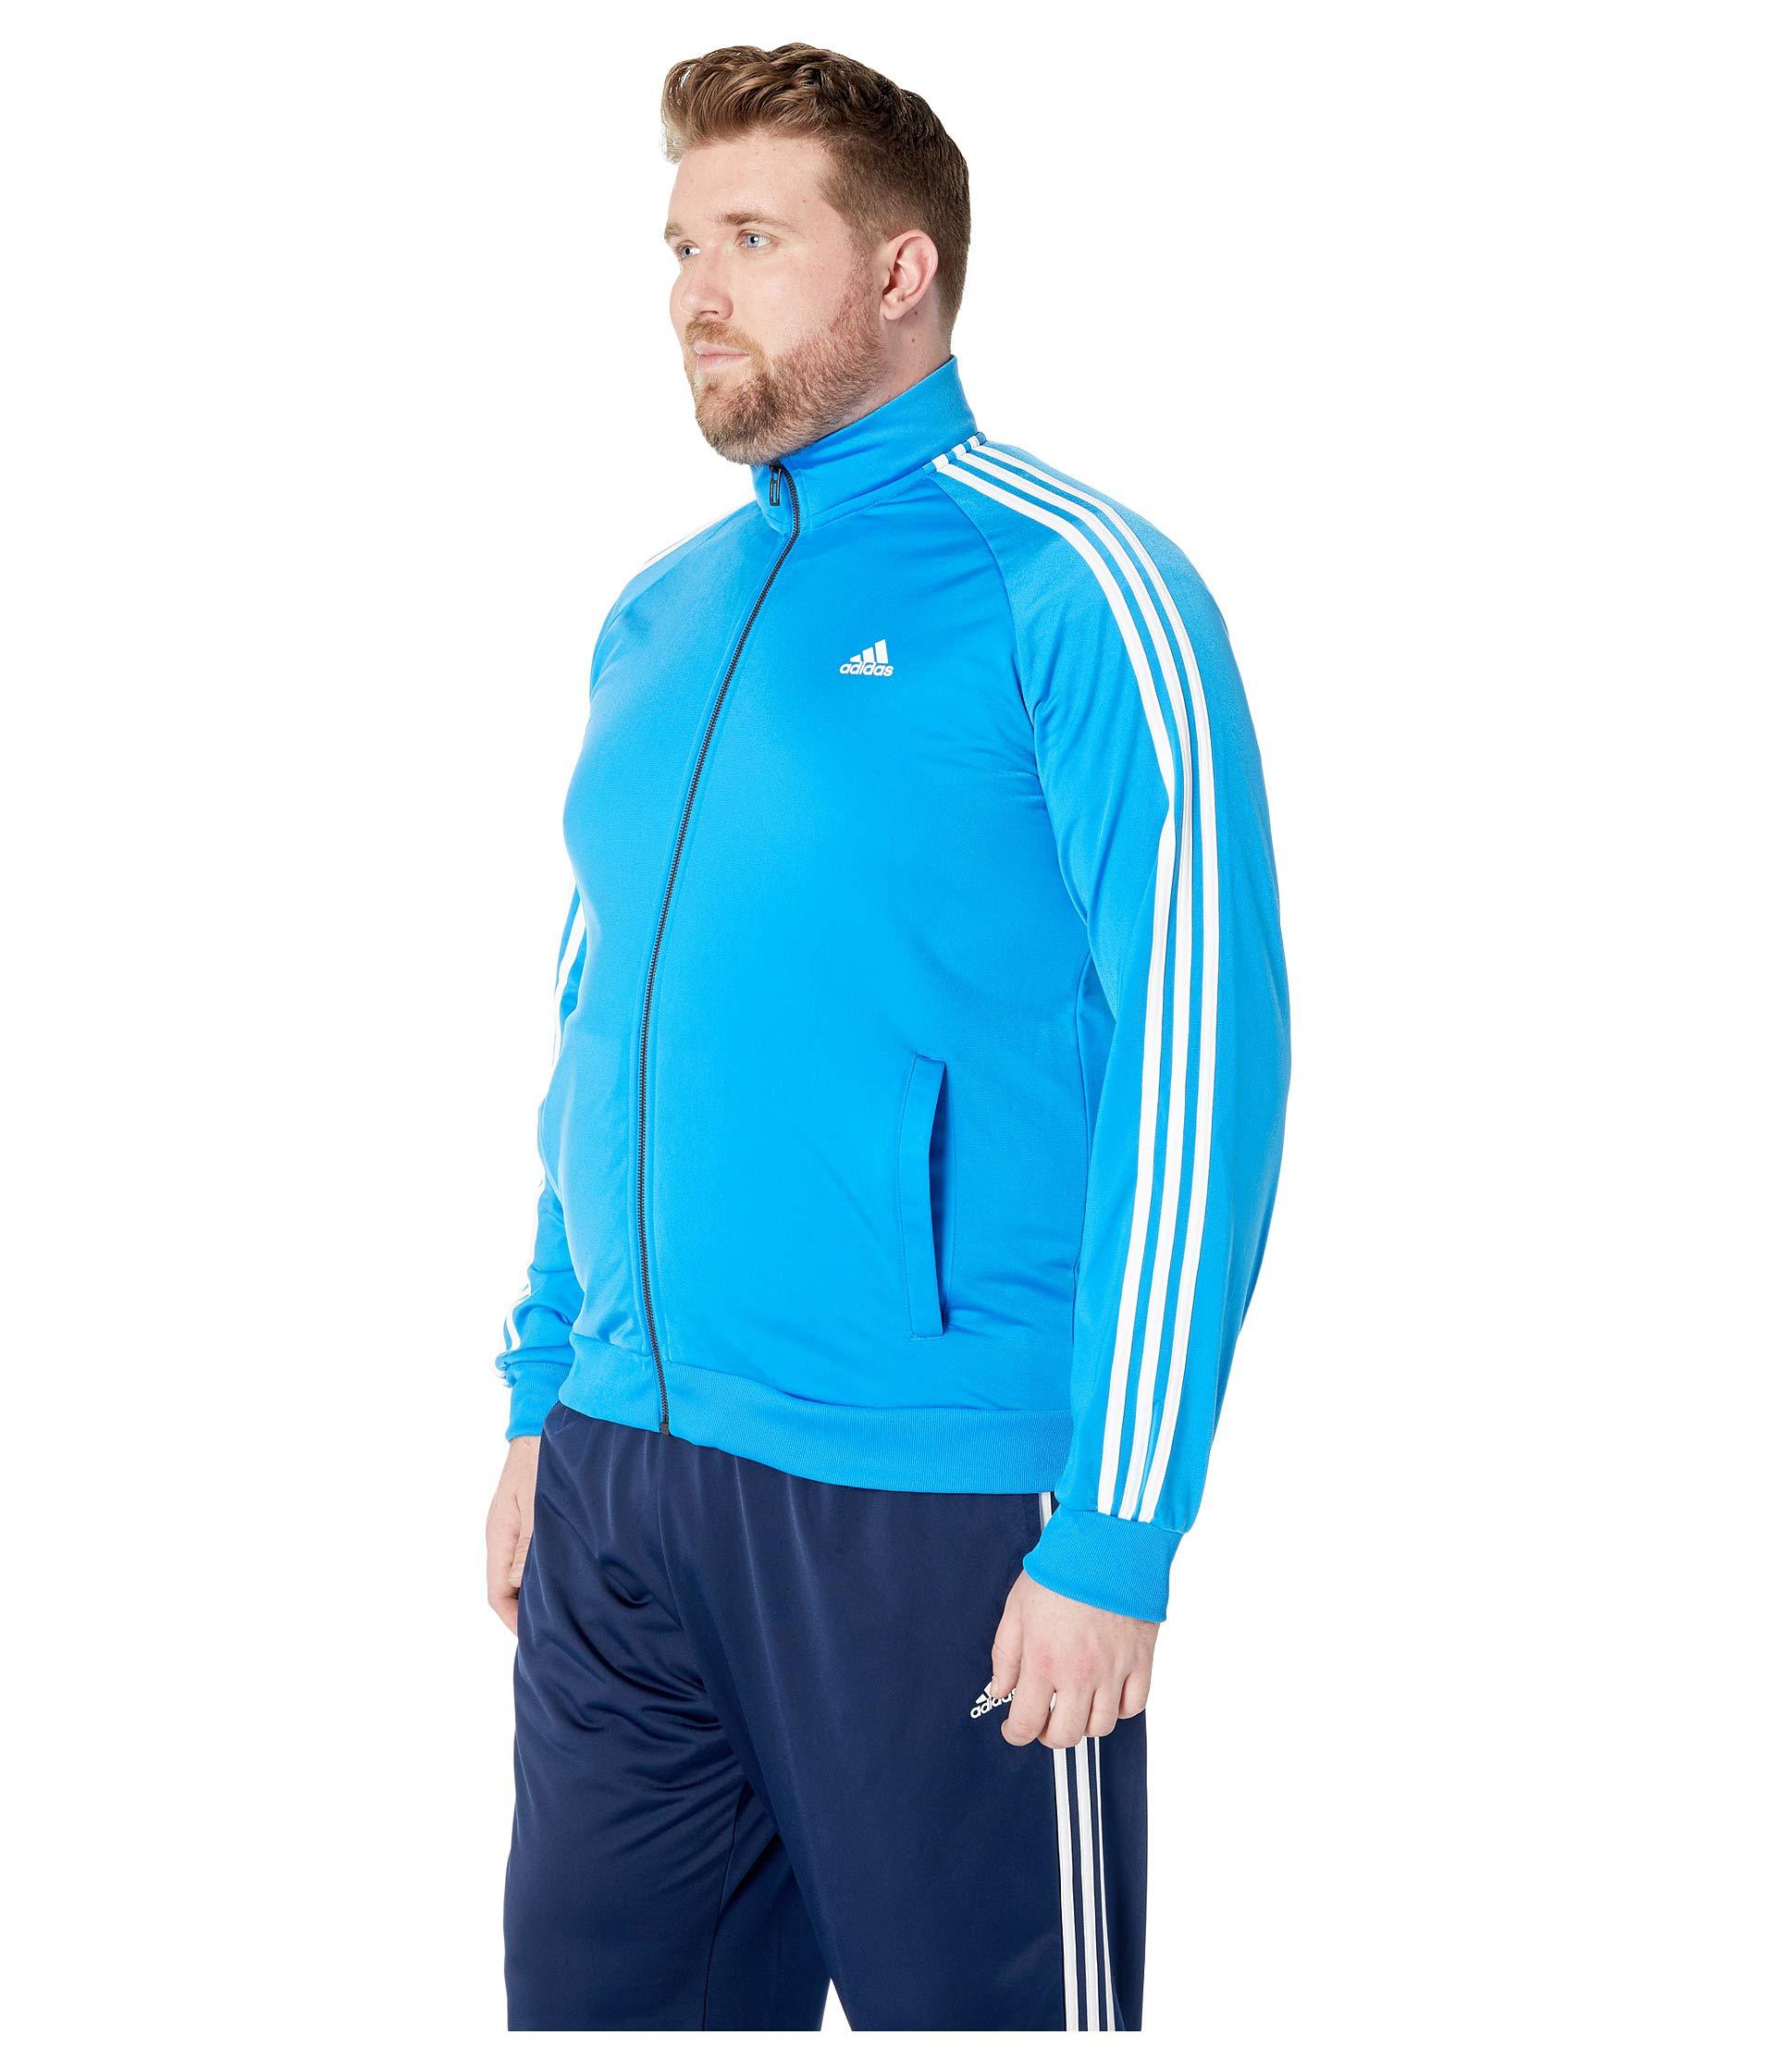 light blue adidas jacket with white stripes